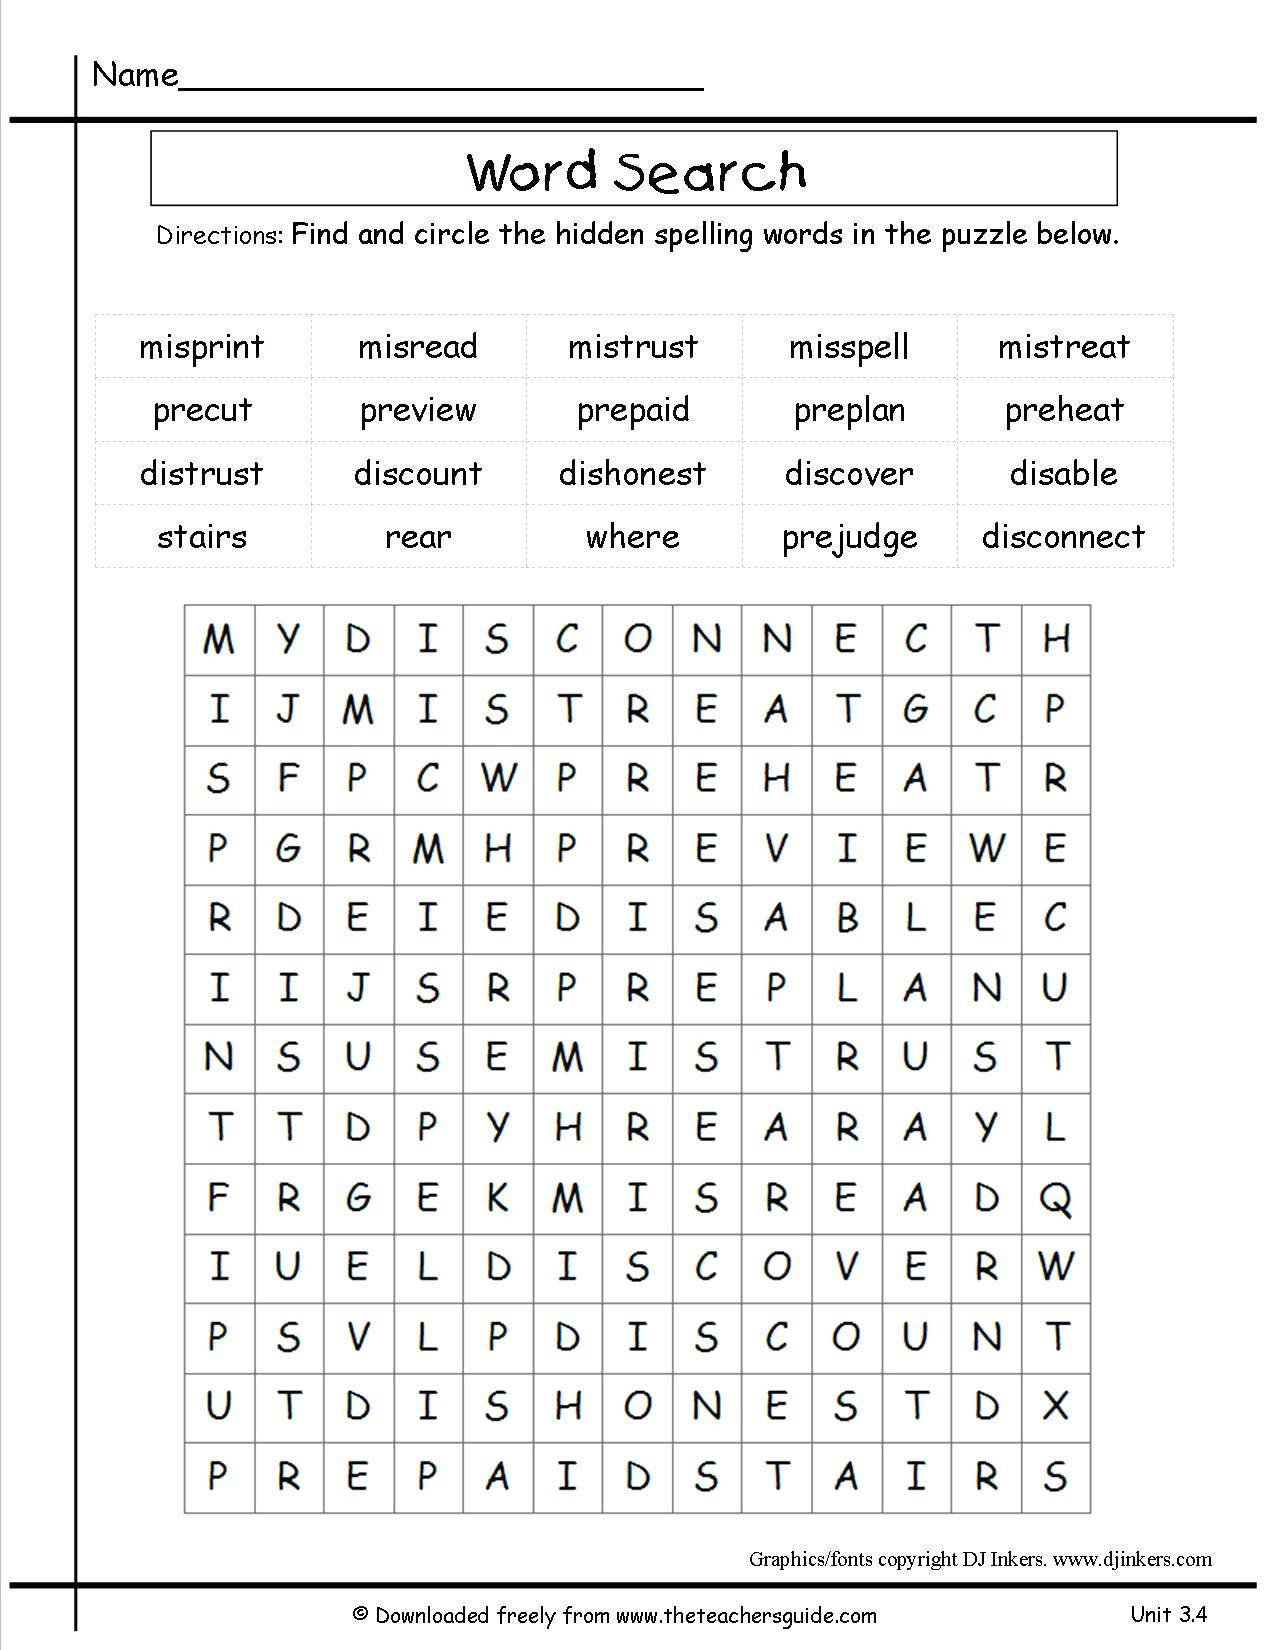 Word Search Puzzle Generator Printable Wonderword Puzzles Printable 